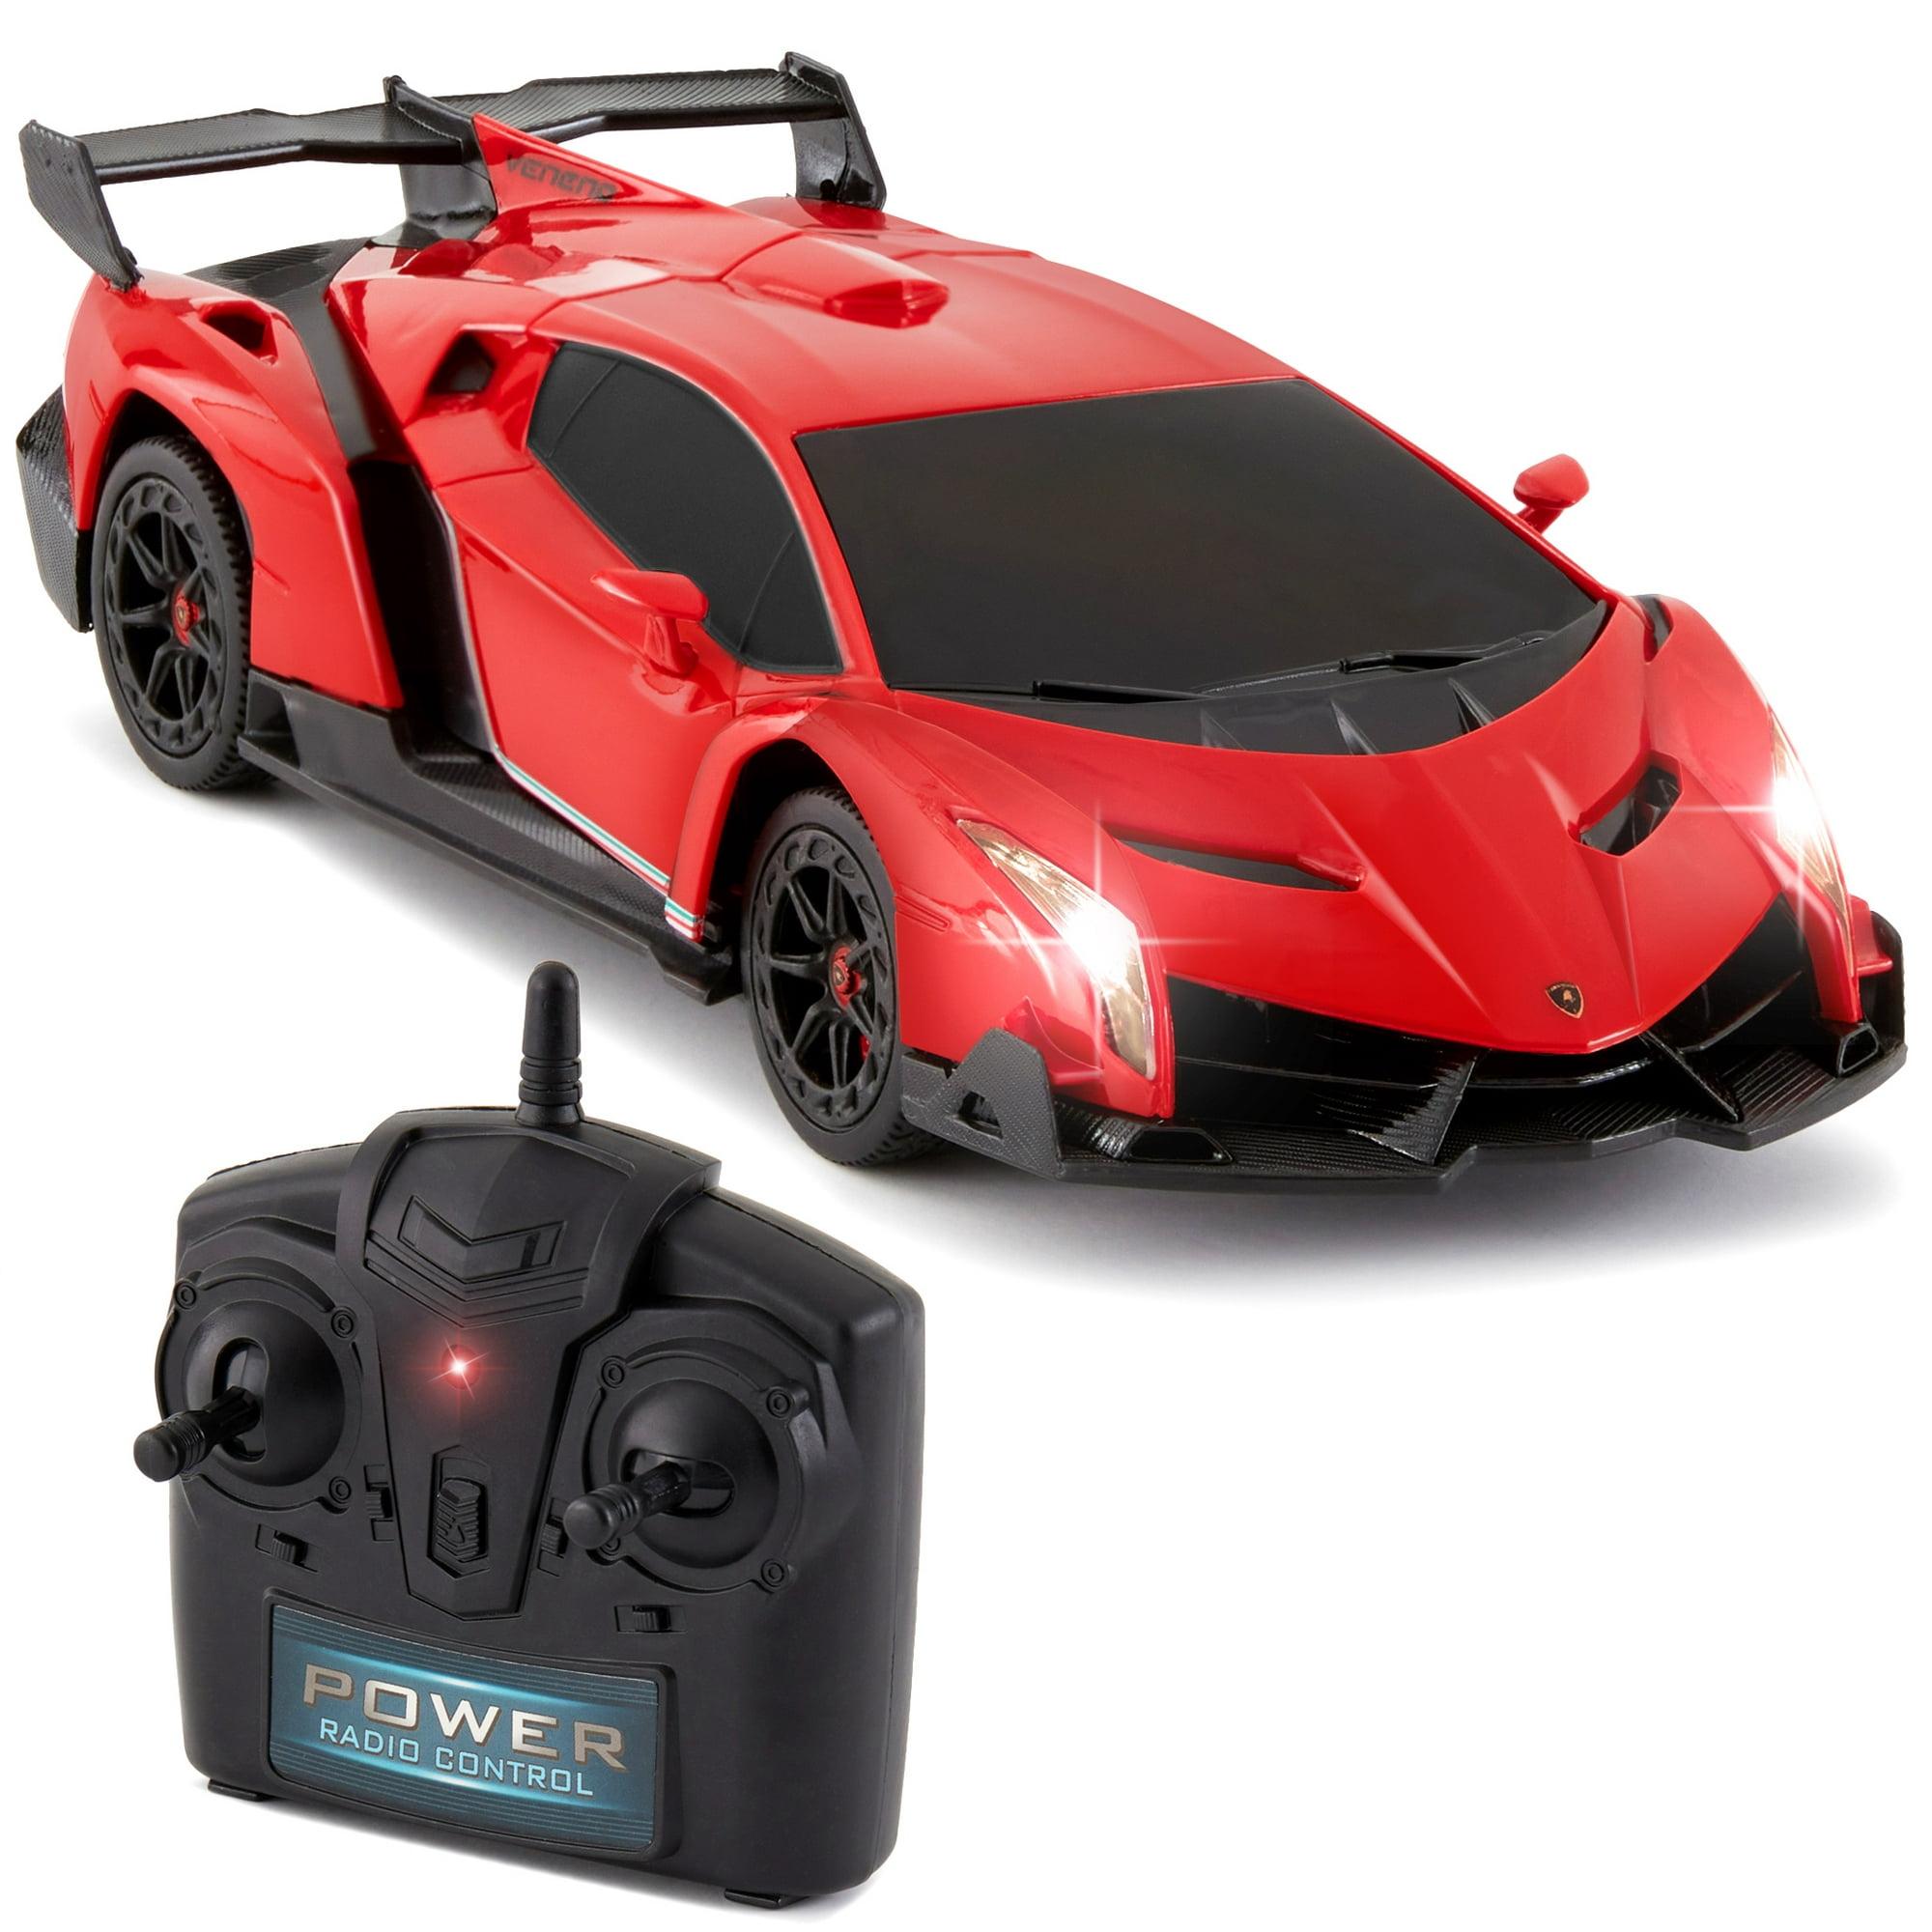 Lamborghini Toy Remote Control: Availability and Deals.